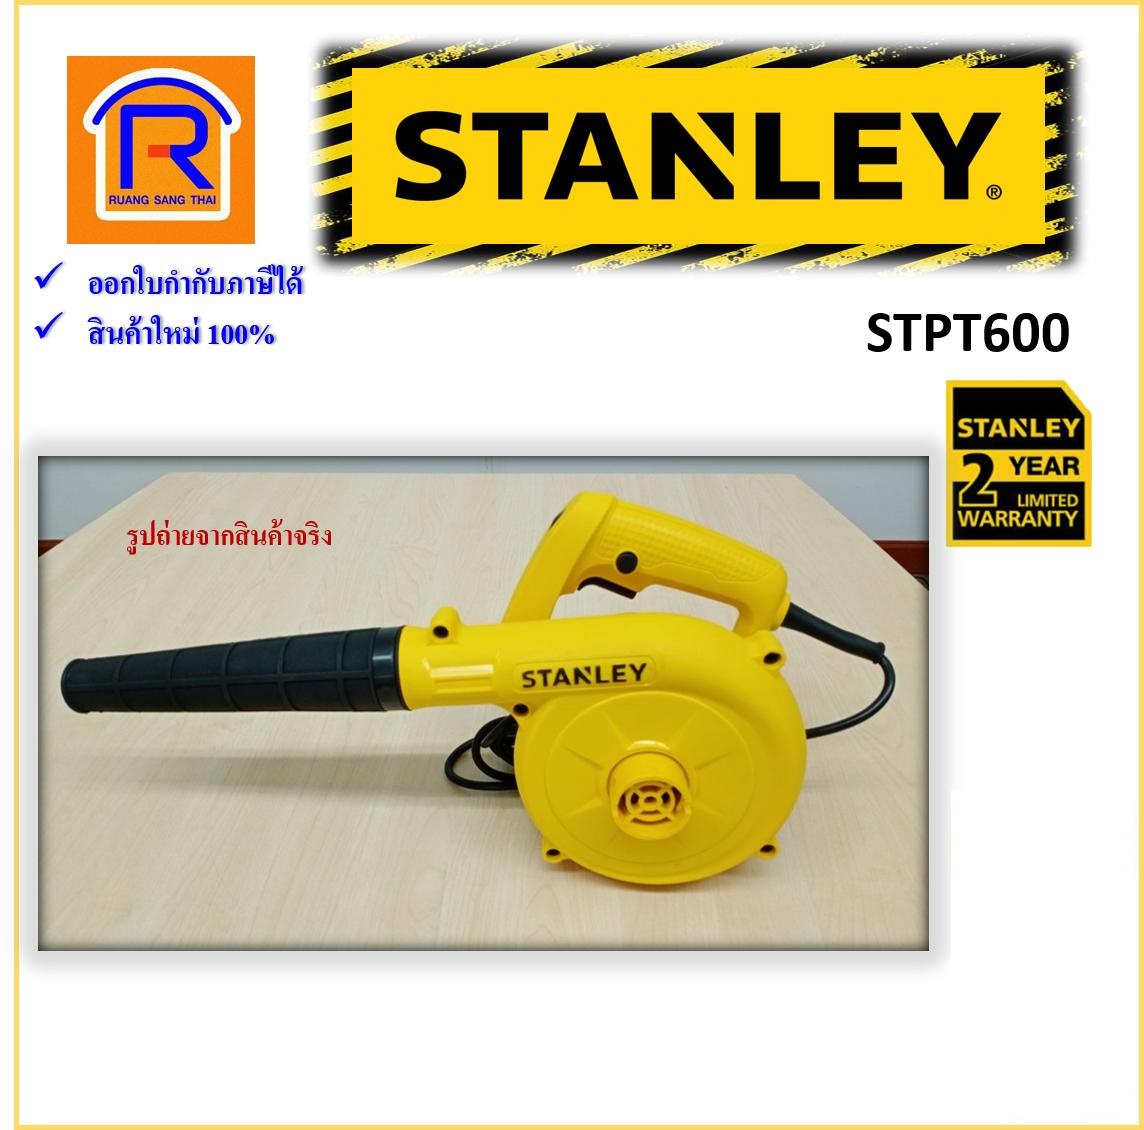 STANLEY STPT600